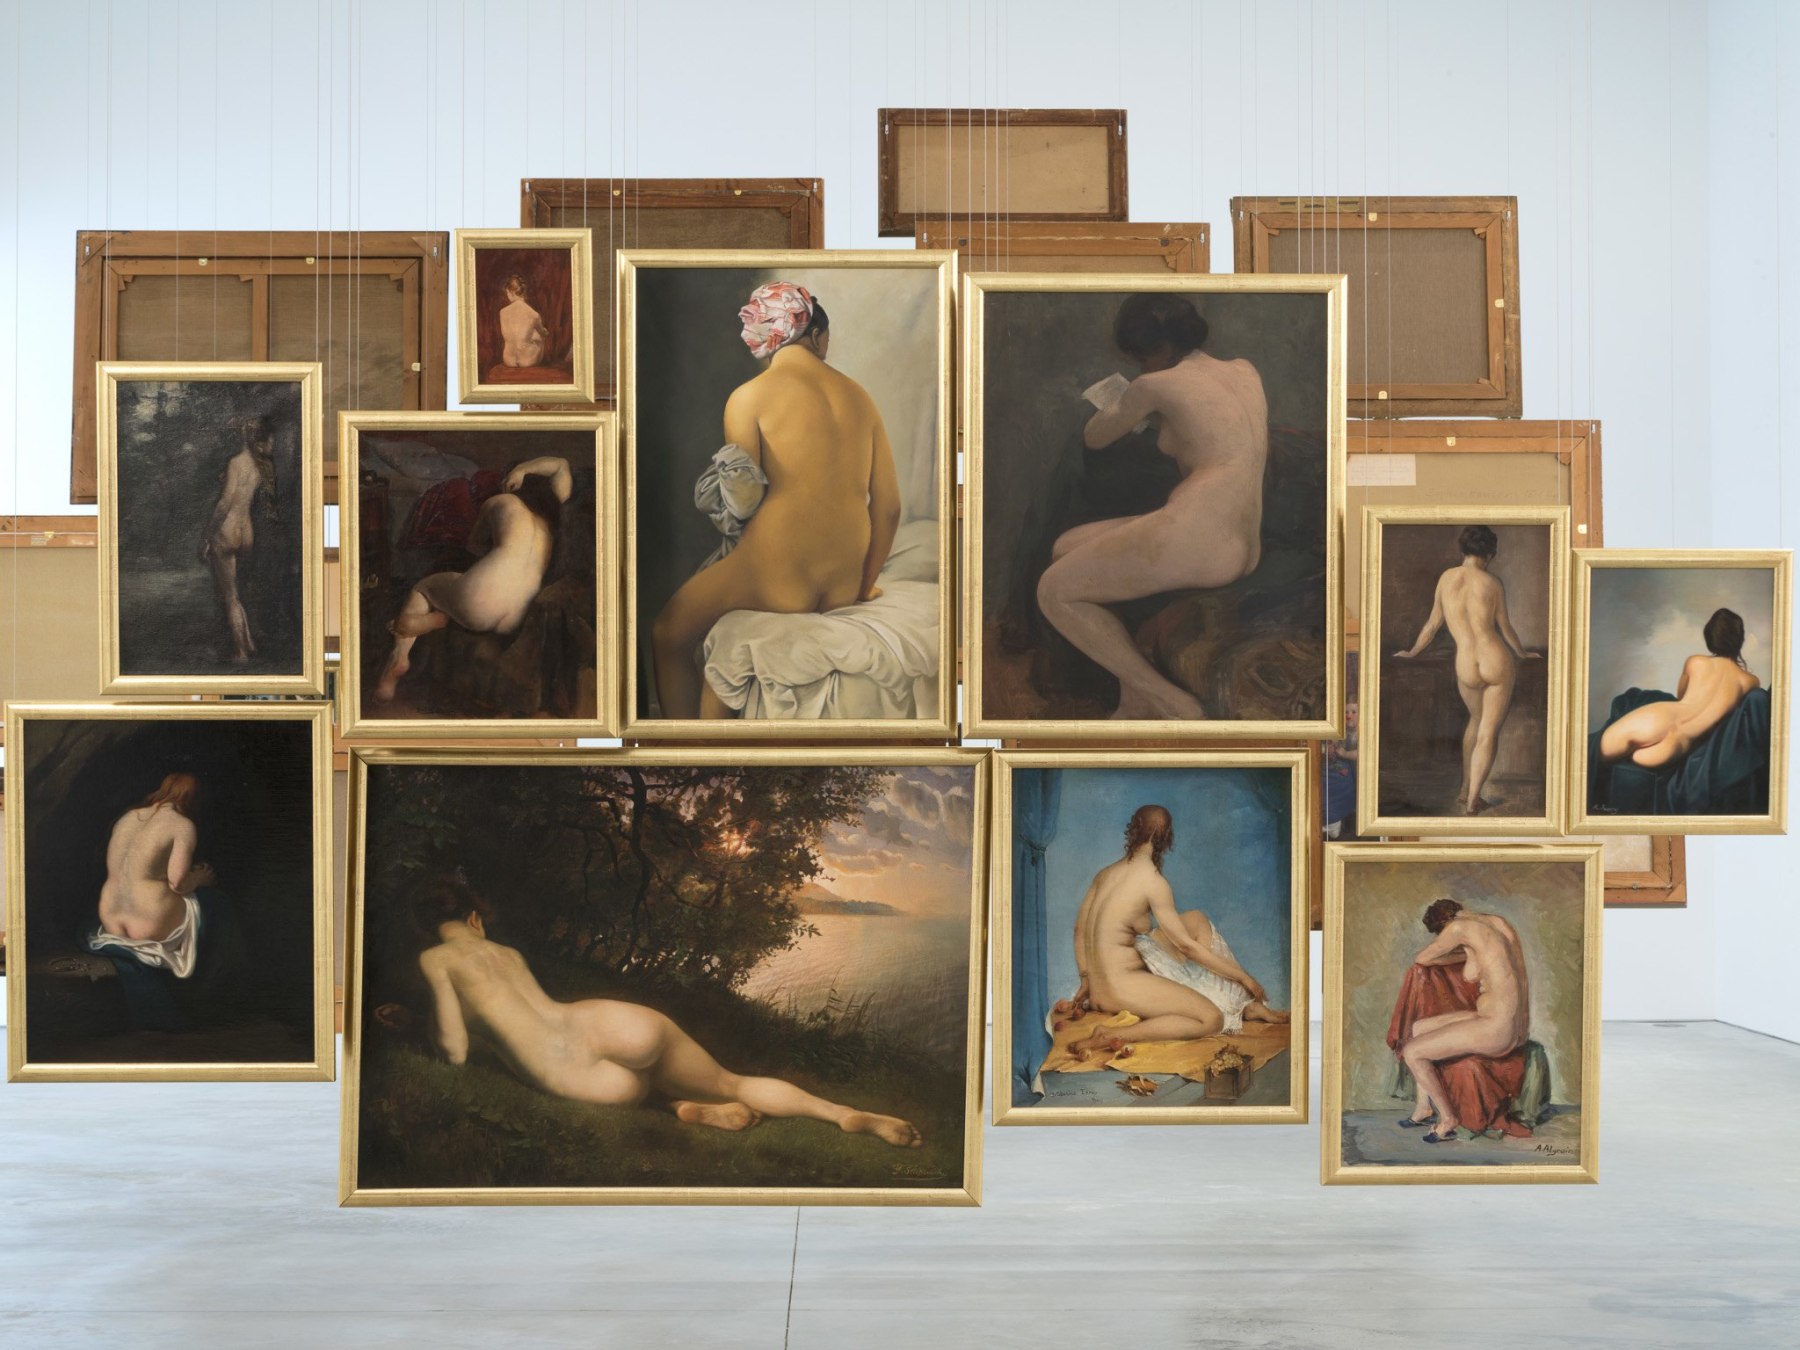 Hans-Peter Feldmann, Back of the nude woman